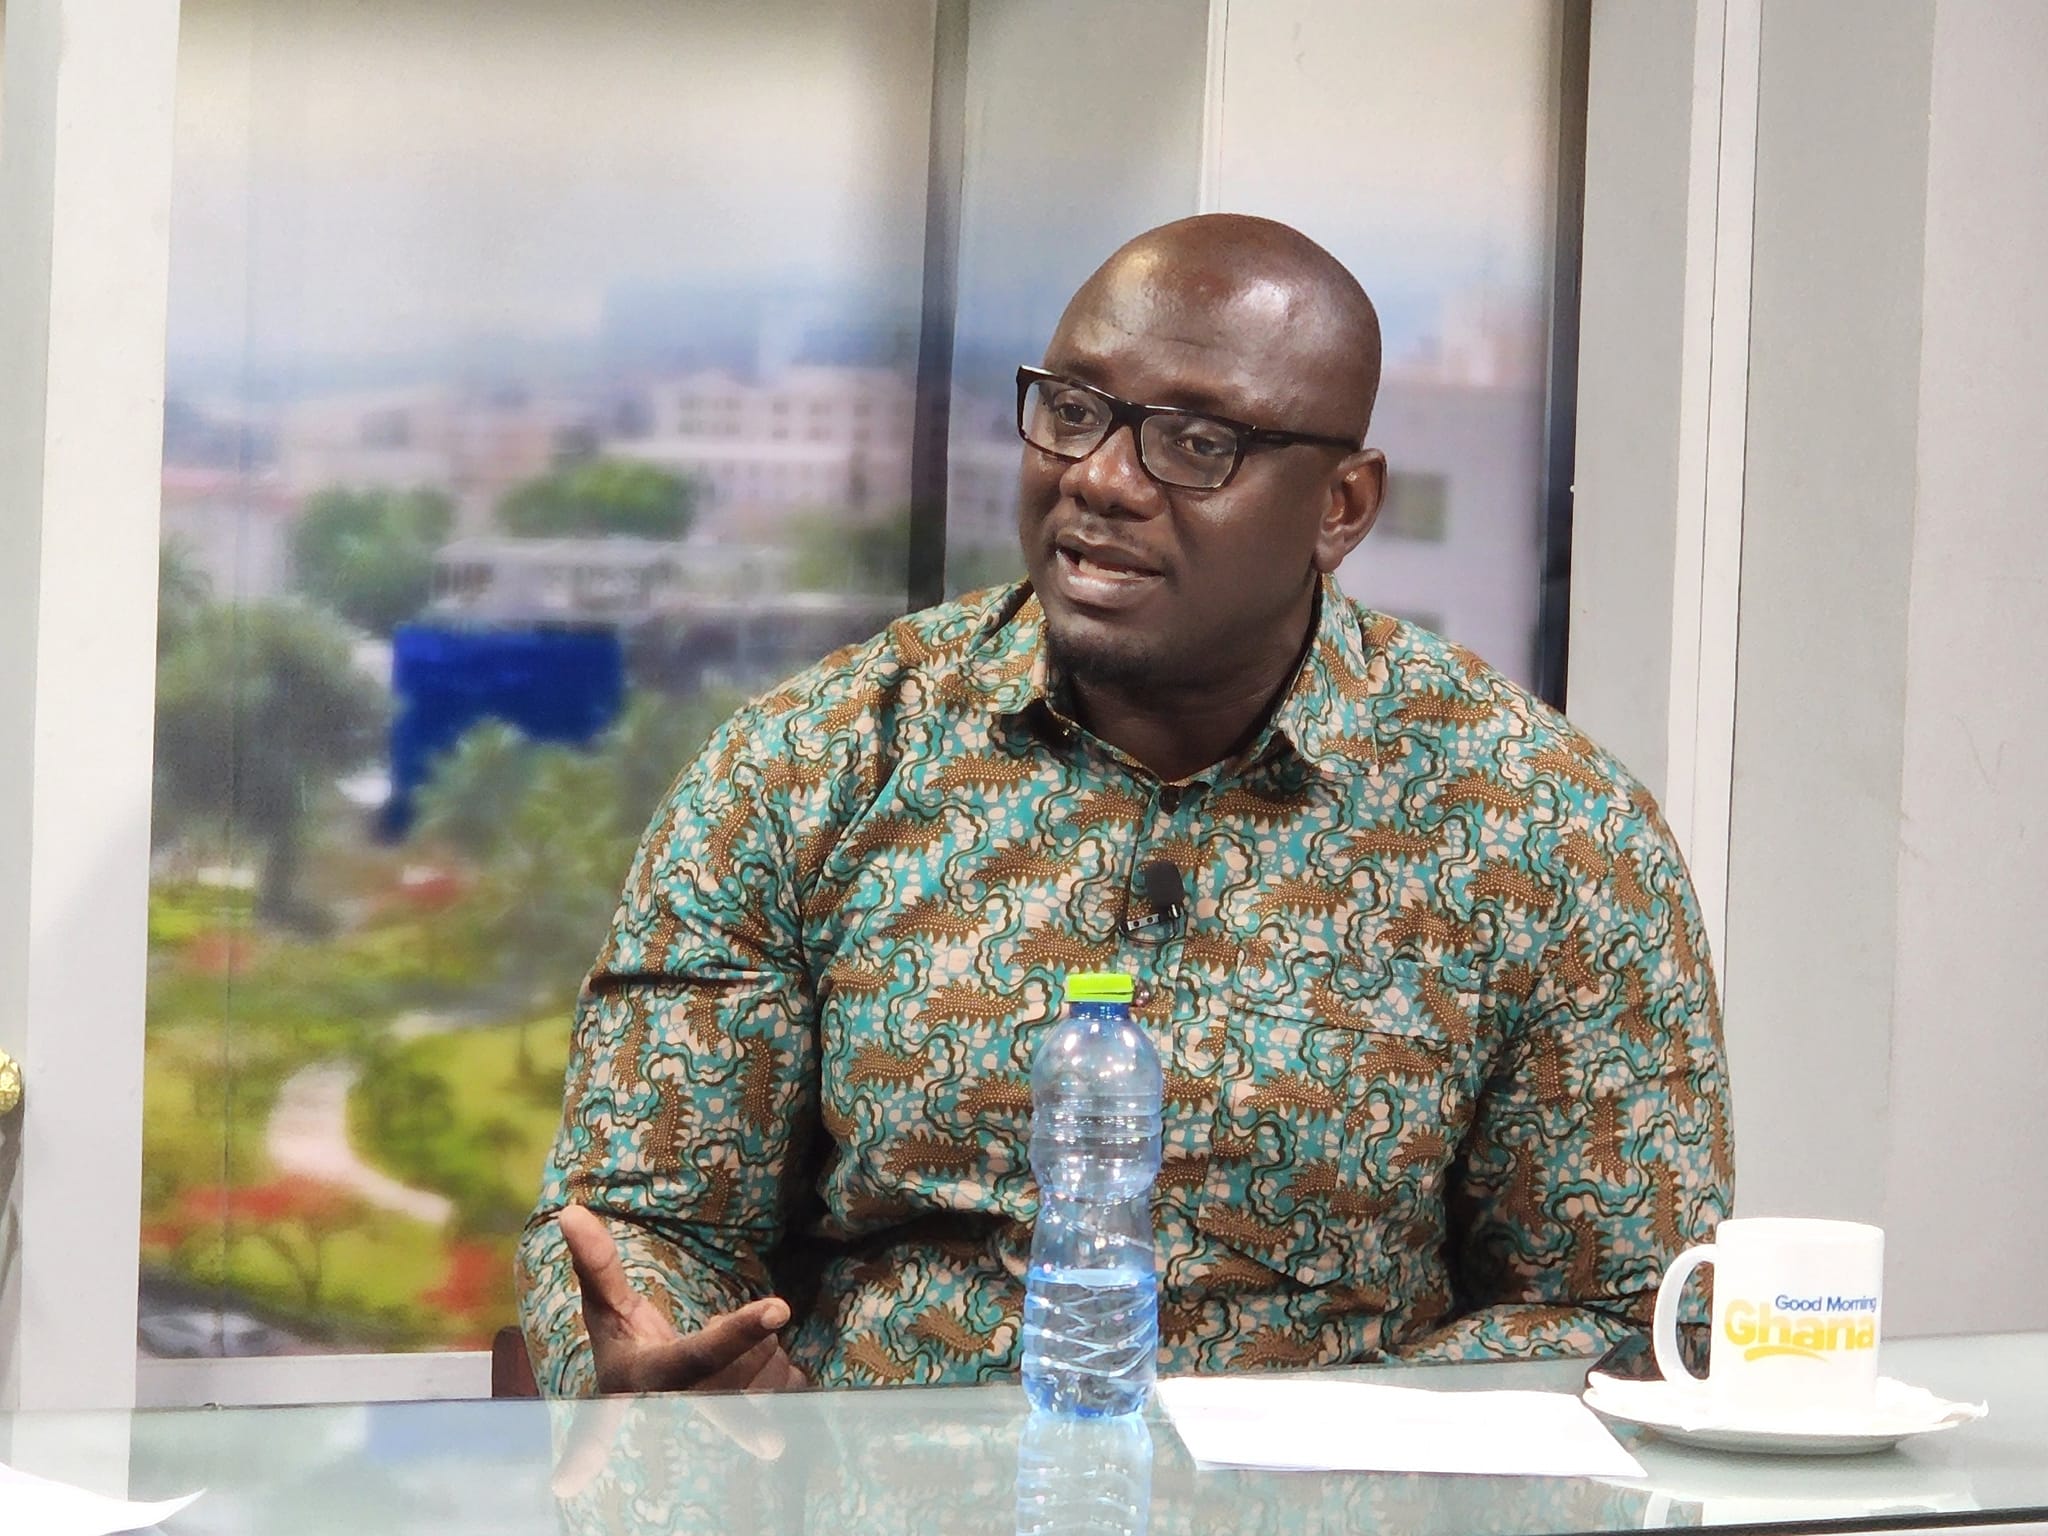 Cecilia Dapaah’s scandal: Let’s focus our energies on Ghana’s progress instead — Eric Amoako Twum